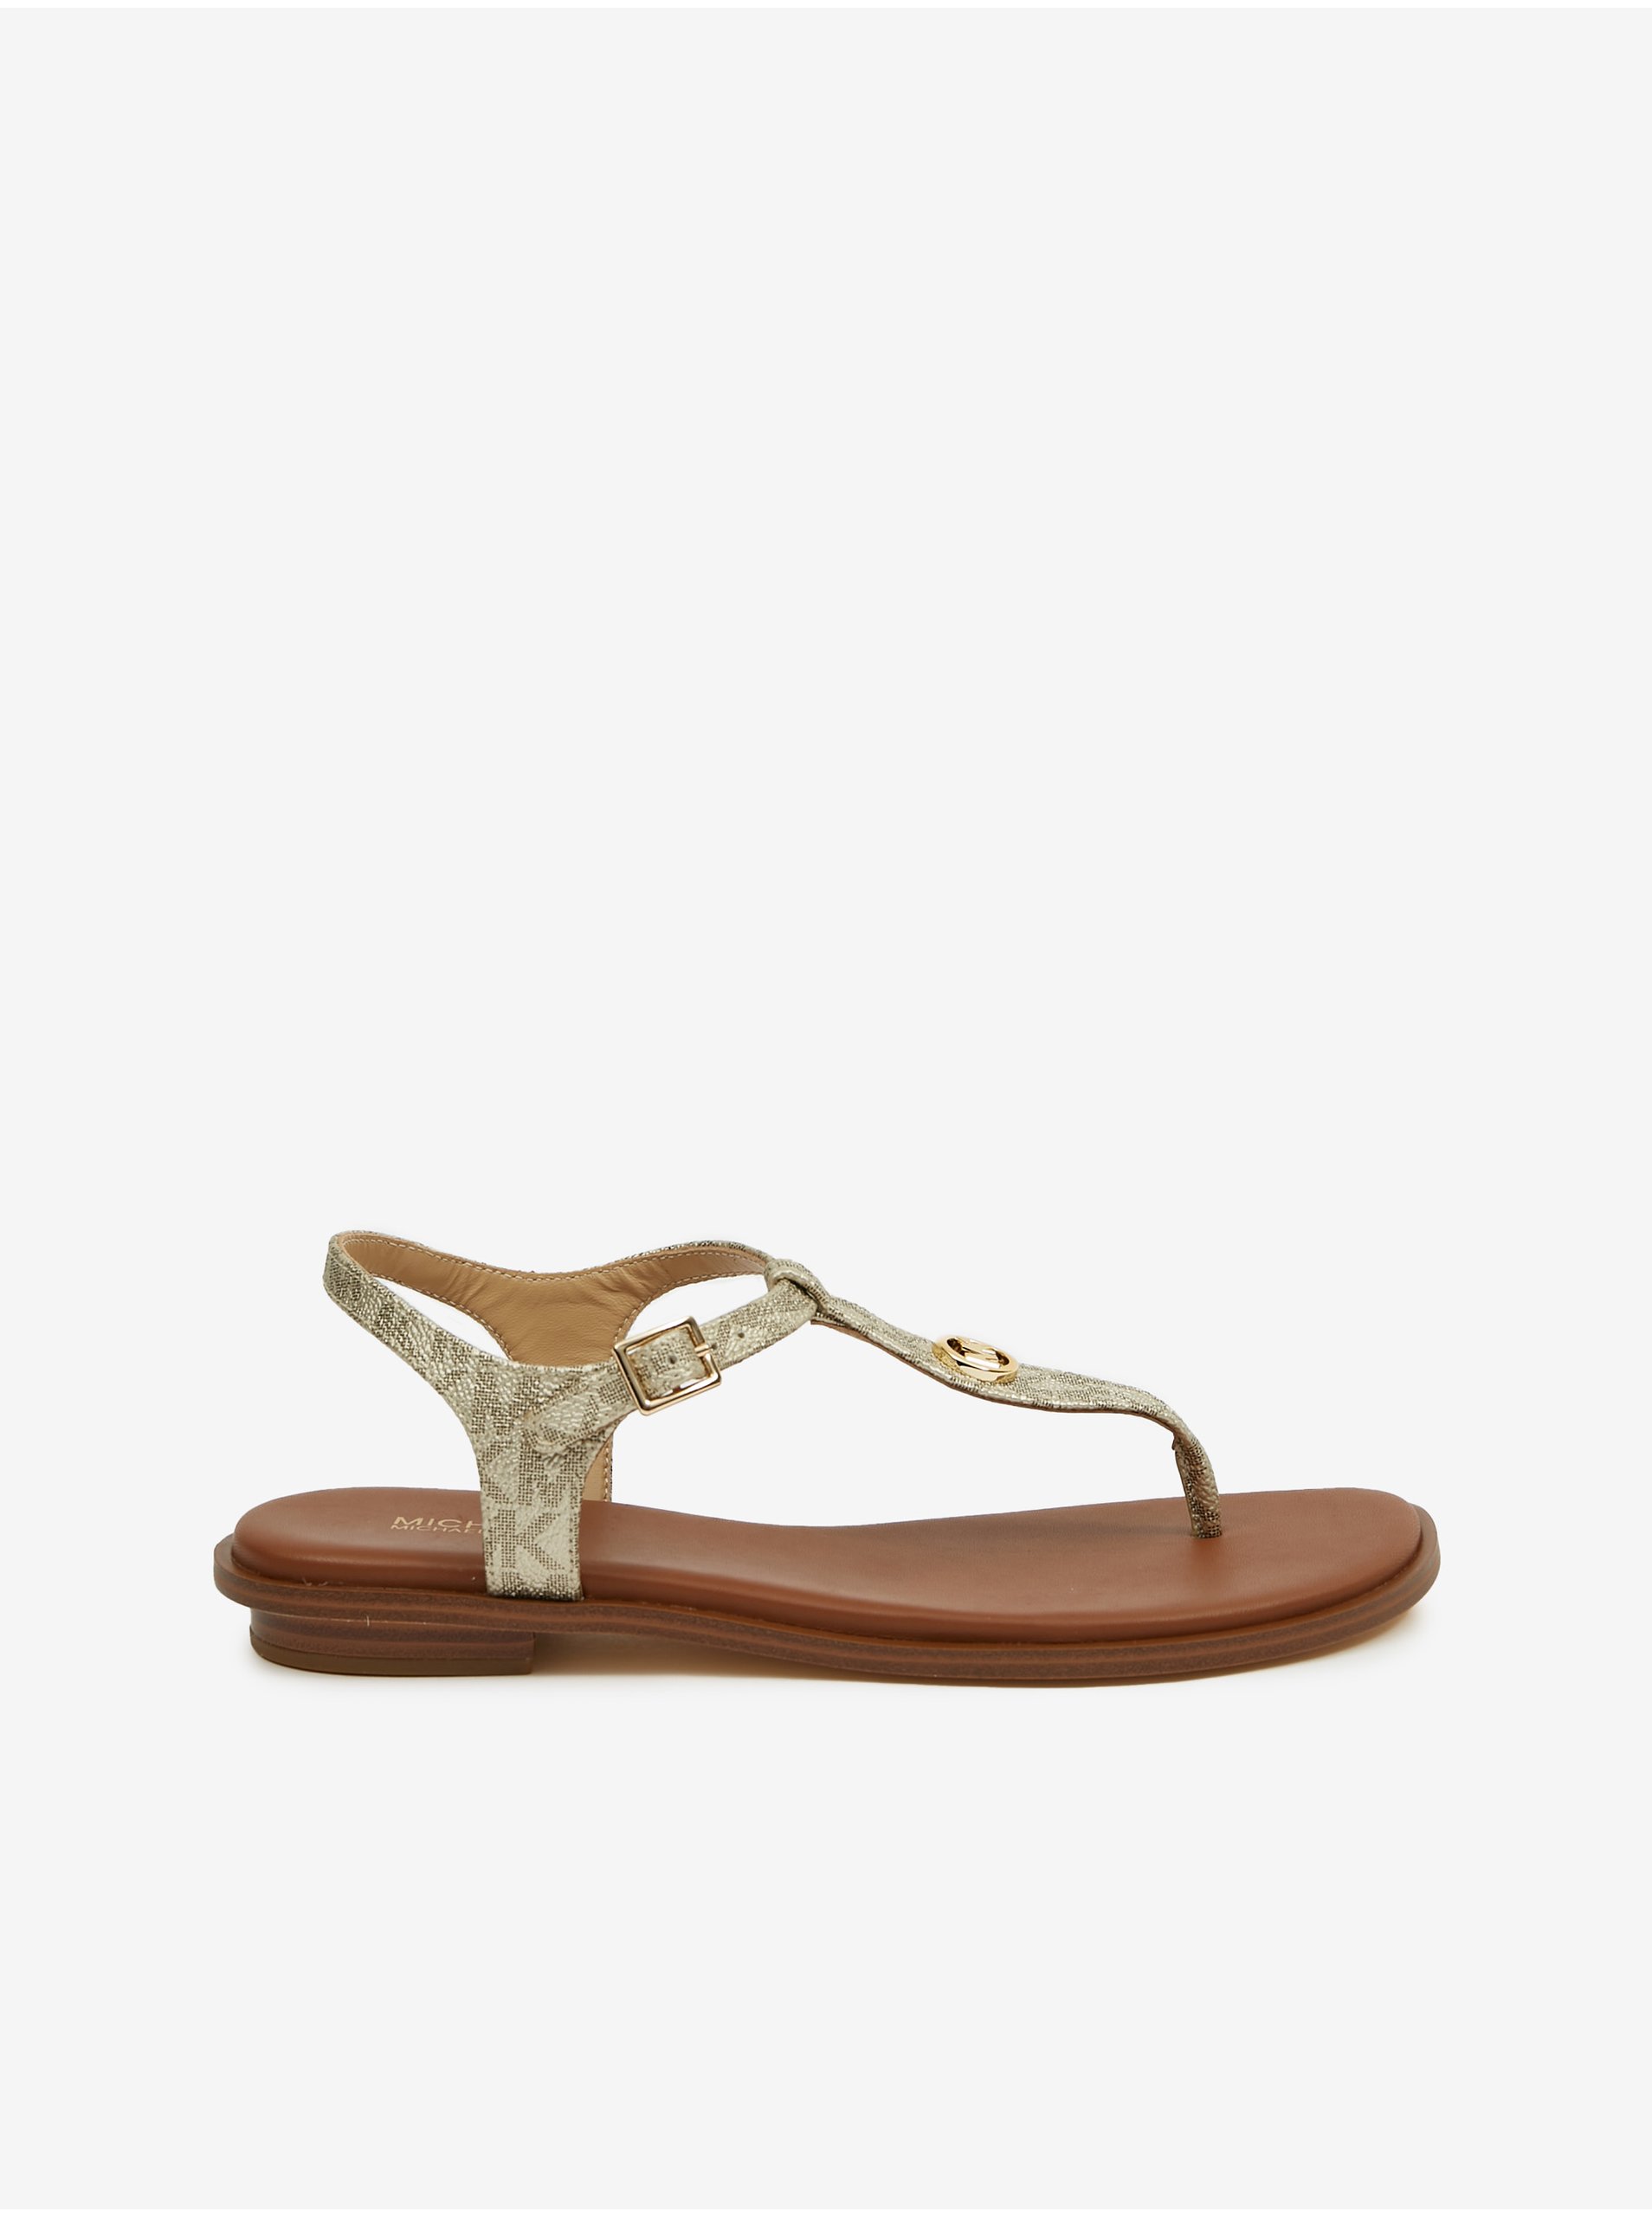 Lacno Béžové dámske vzorované sandále Michael Kors Mallory